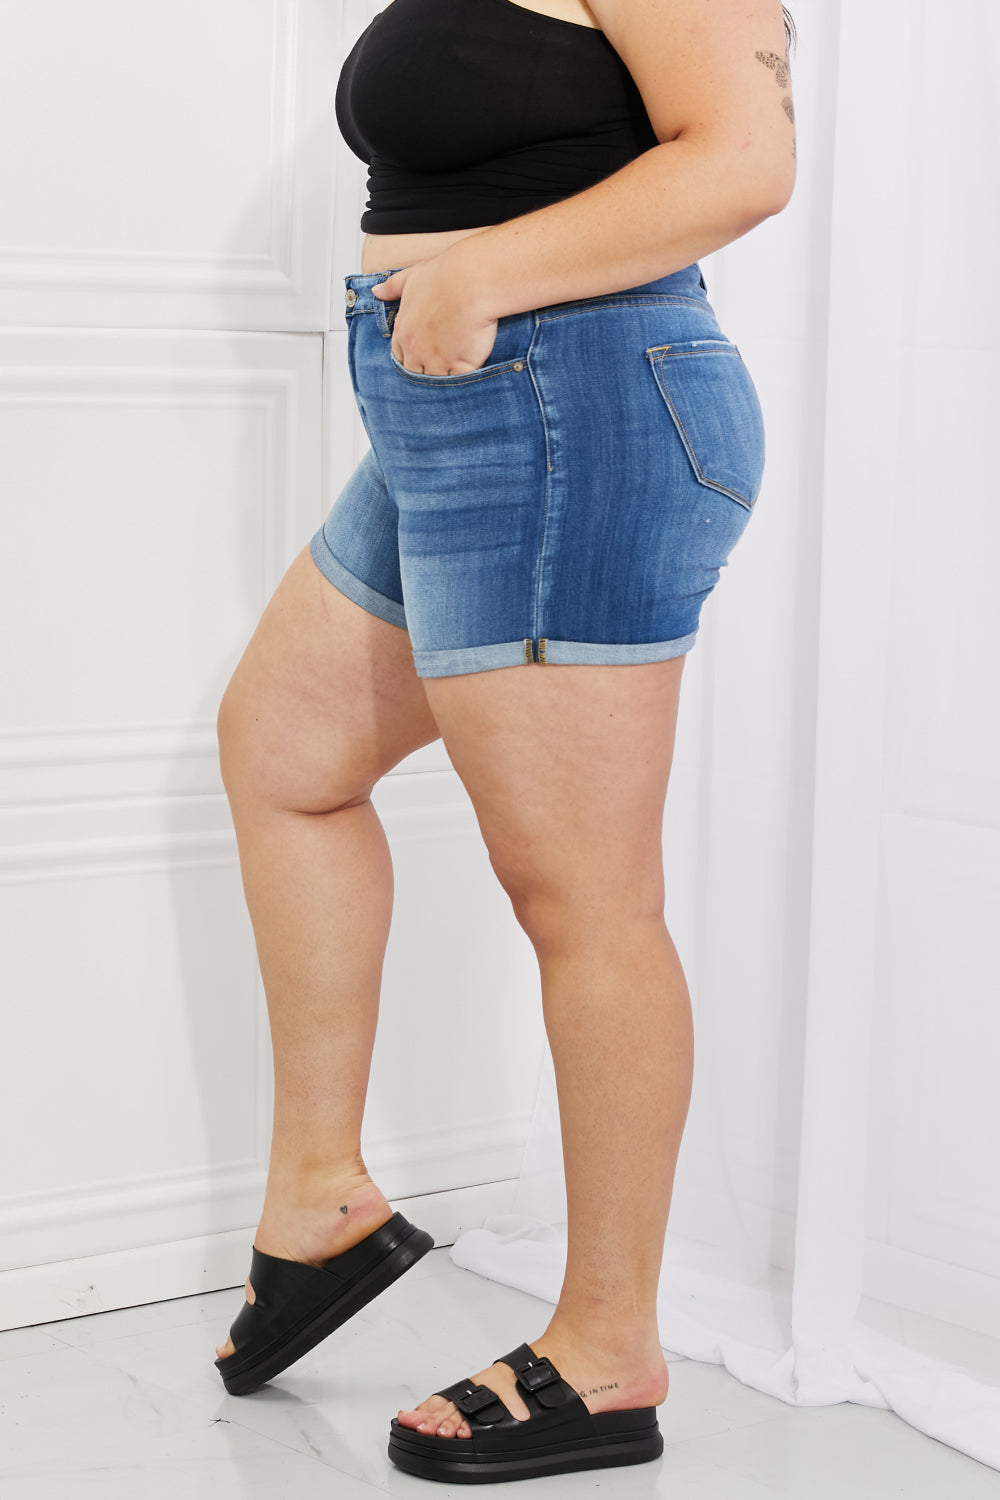 Kancan Full Size High Rise Medium Stone Wash Denim Shorts - The Beauty Alley Boutique Inc